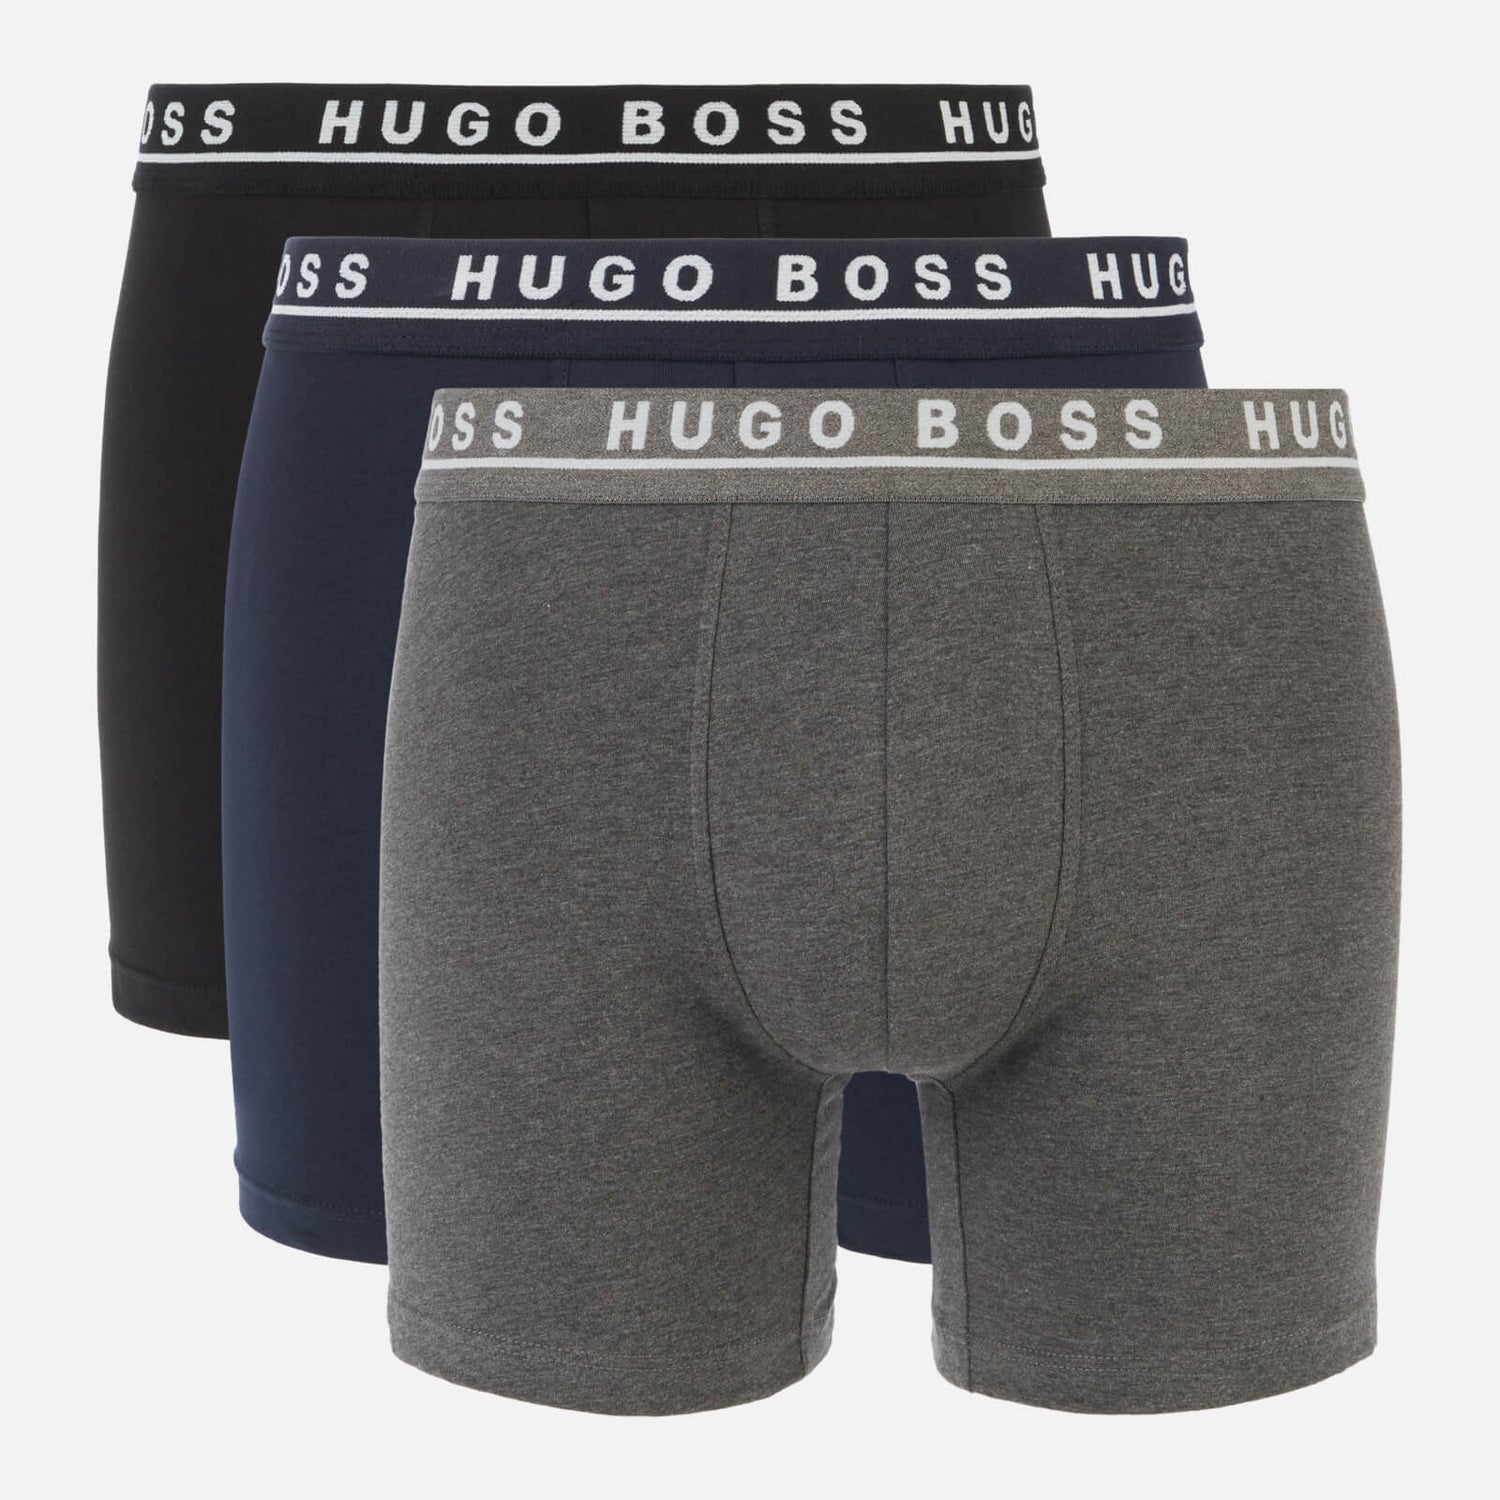 BOSS Bodywear Men's 3-Pack Boxer Briefs - Black/Charcoal/Navy